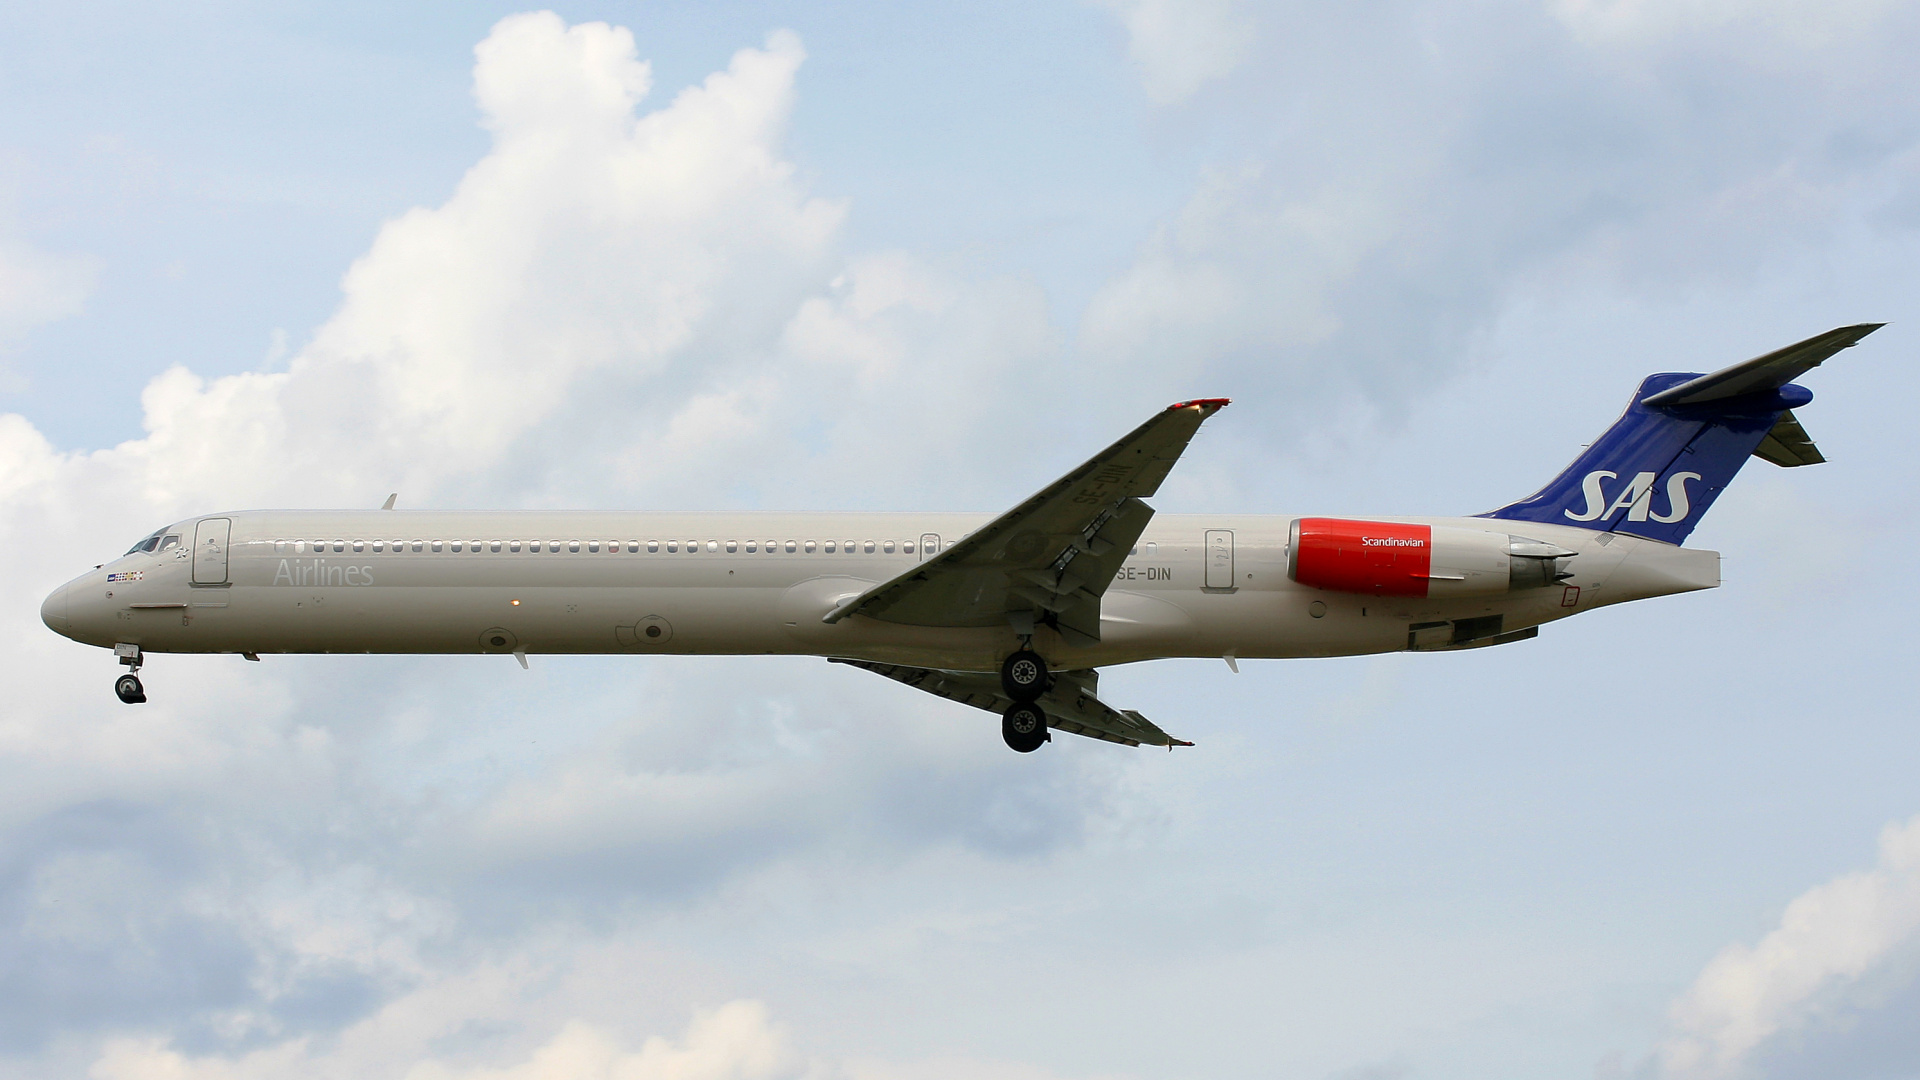 SE-DIN (Aircraft » EPWA Spotting » McDonnell Douglas MD-82 » SAS Scandinavian Airlines)